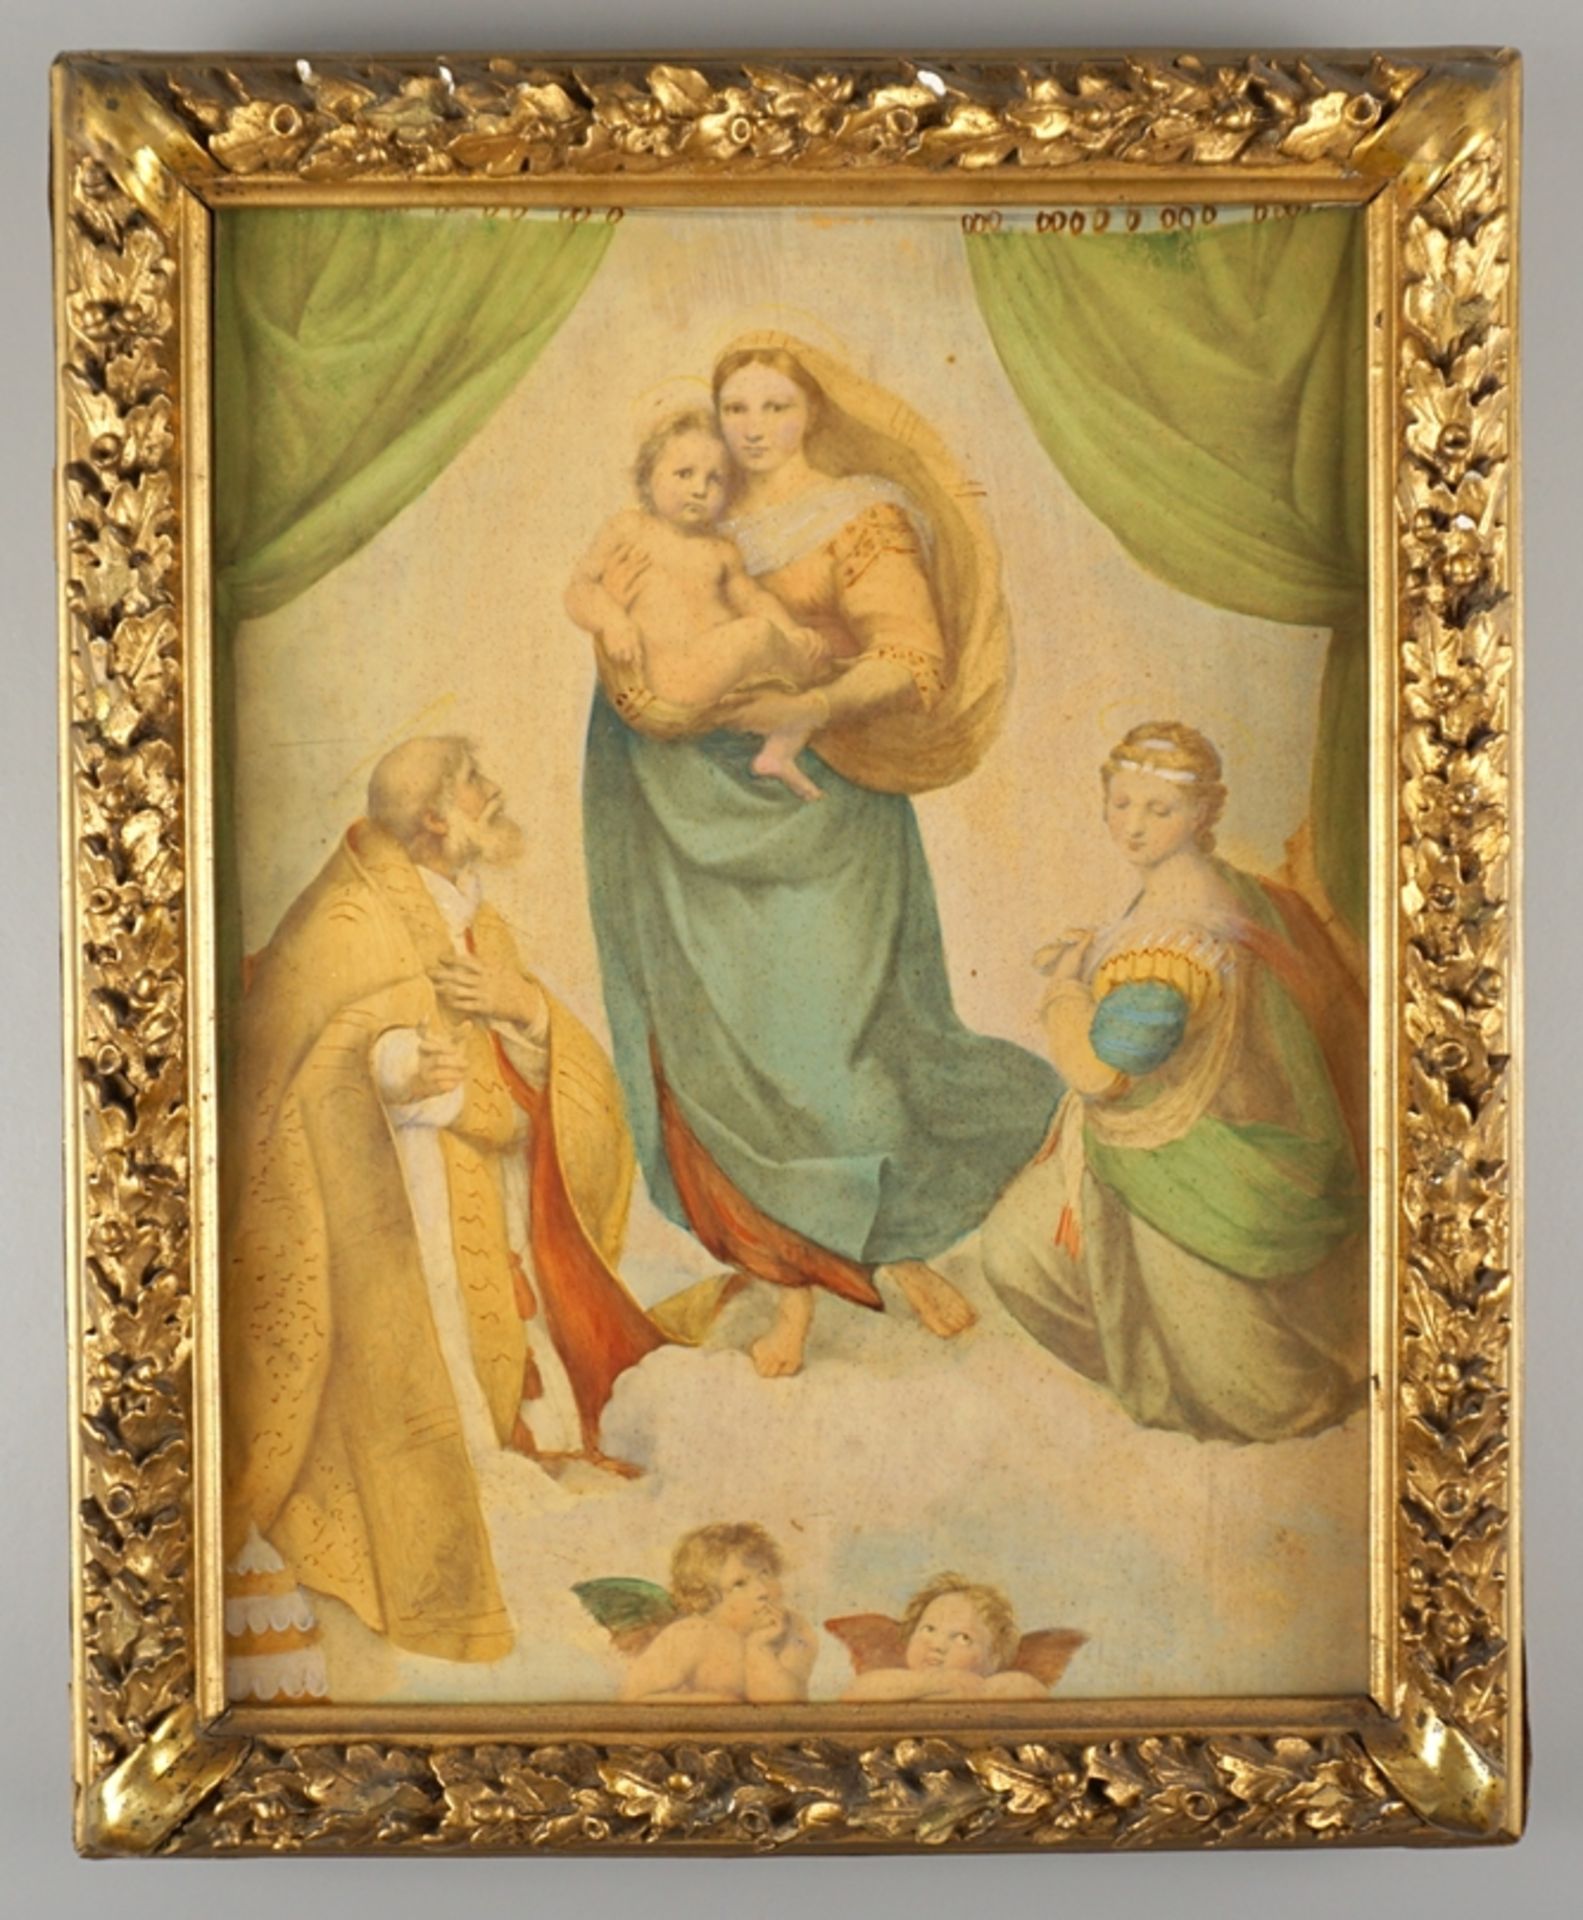 Gold stucco frame, around 1890, with print "Sistine Madonna" after Rafael